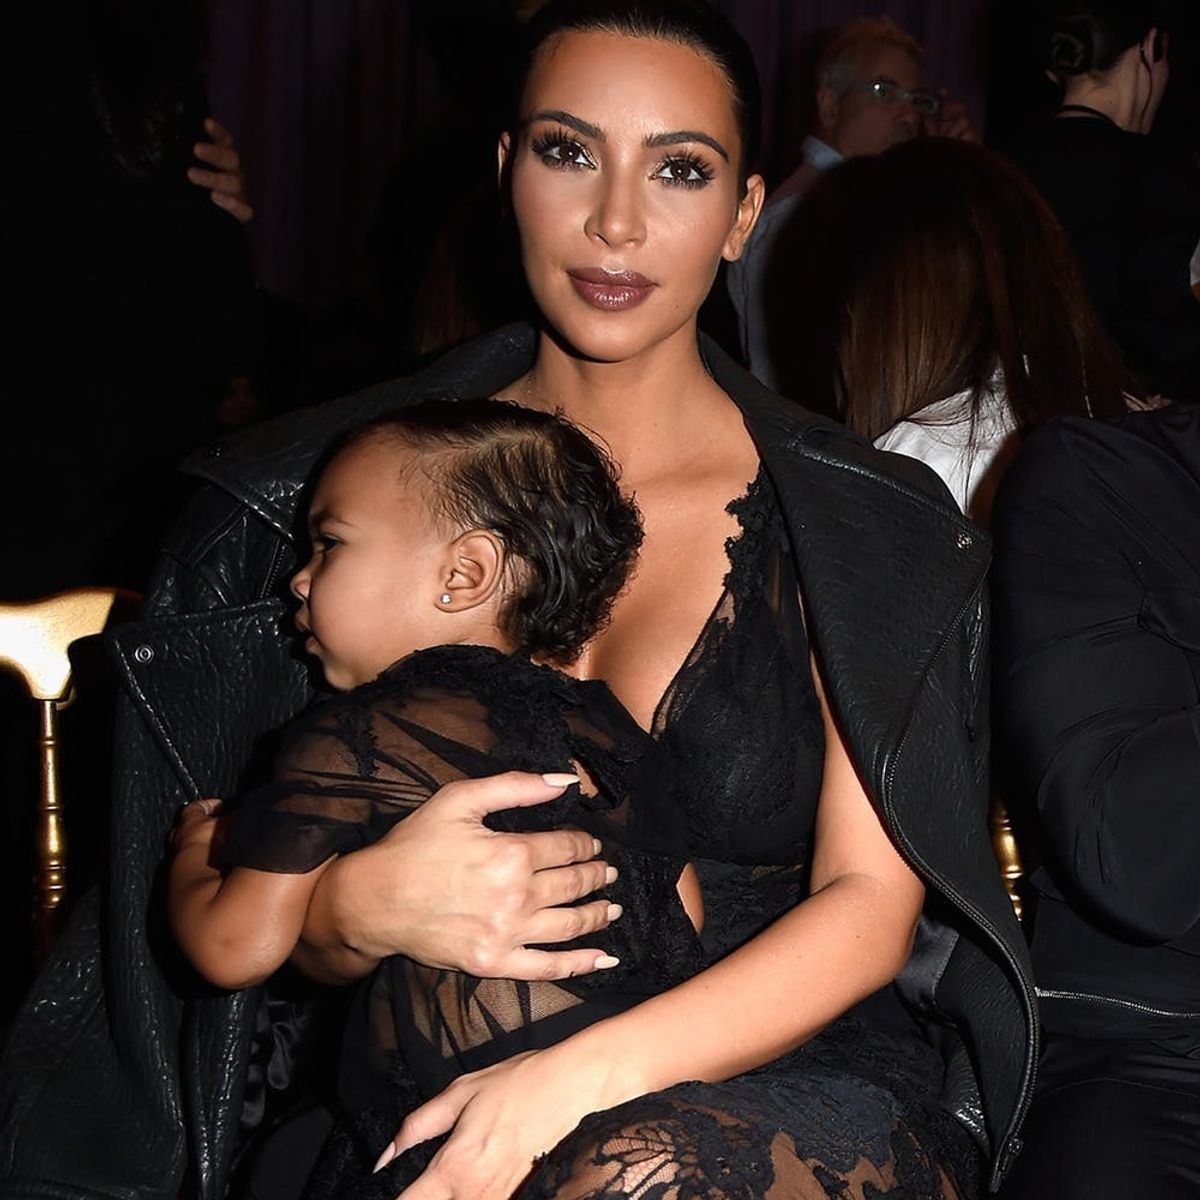 Saint West Looks JUST Like Kim Kardashian in This New Baby Photo